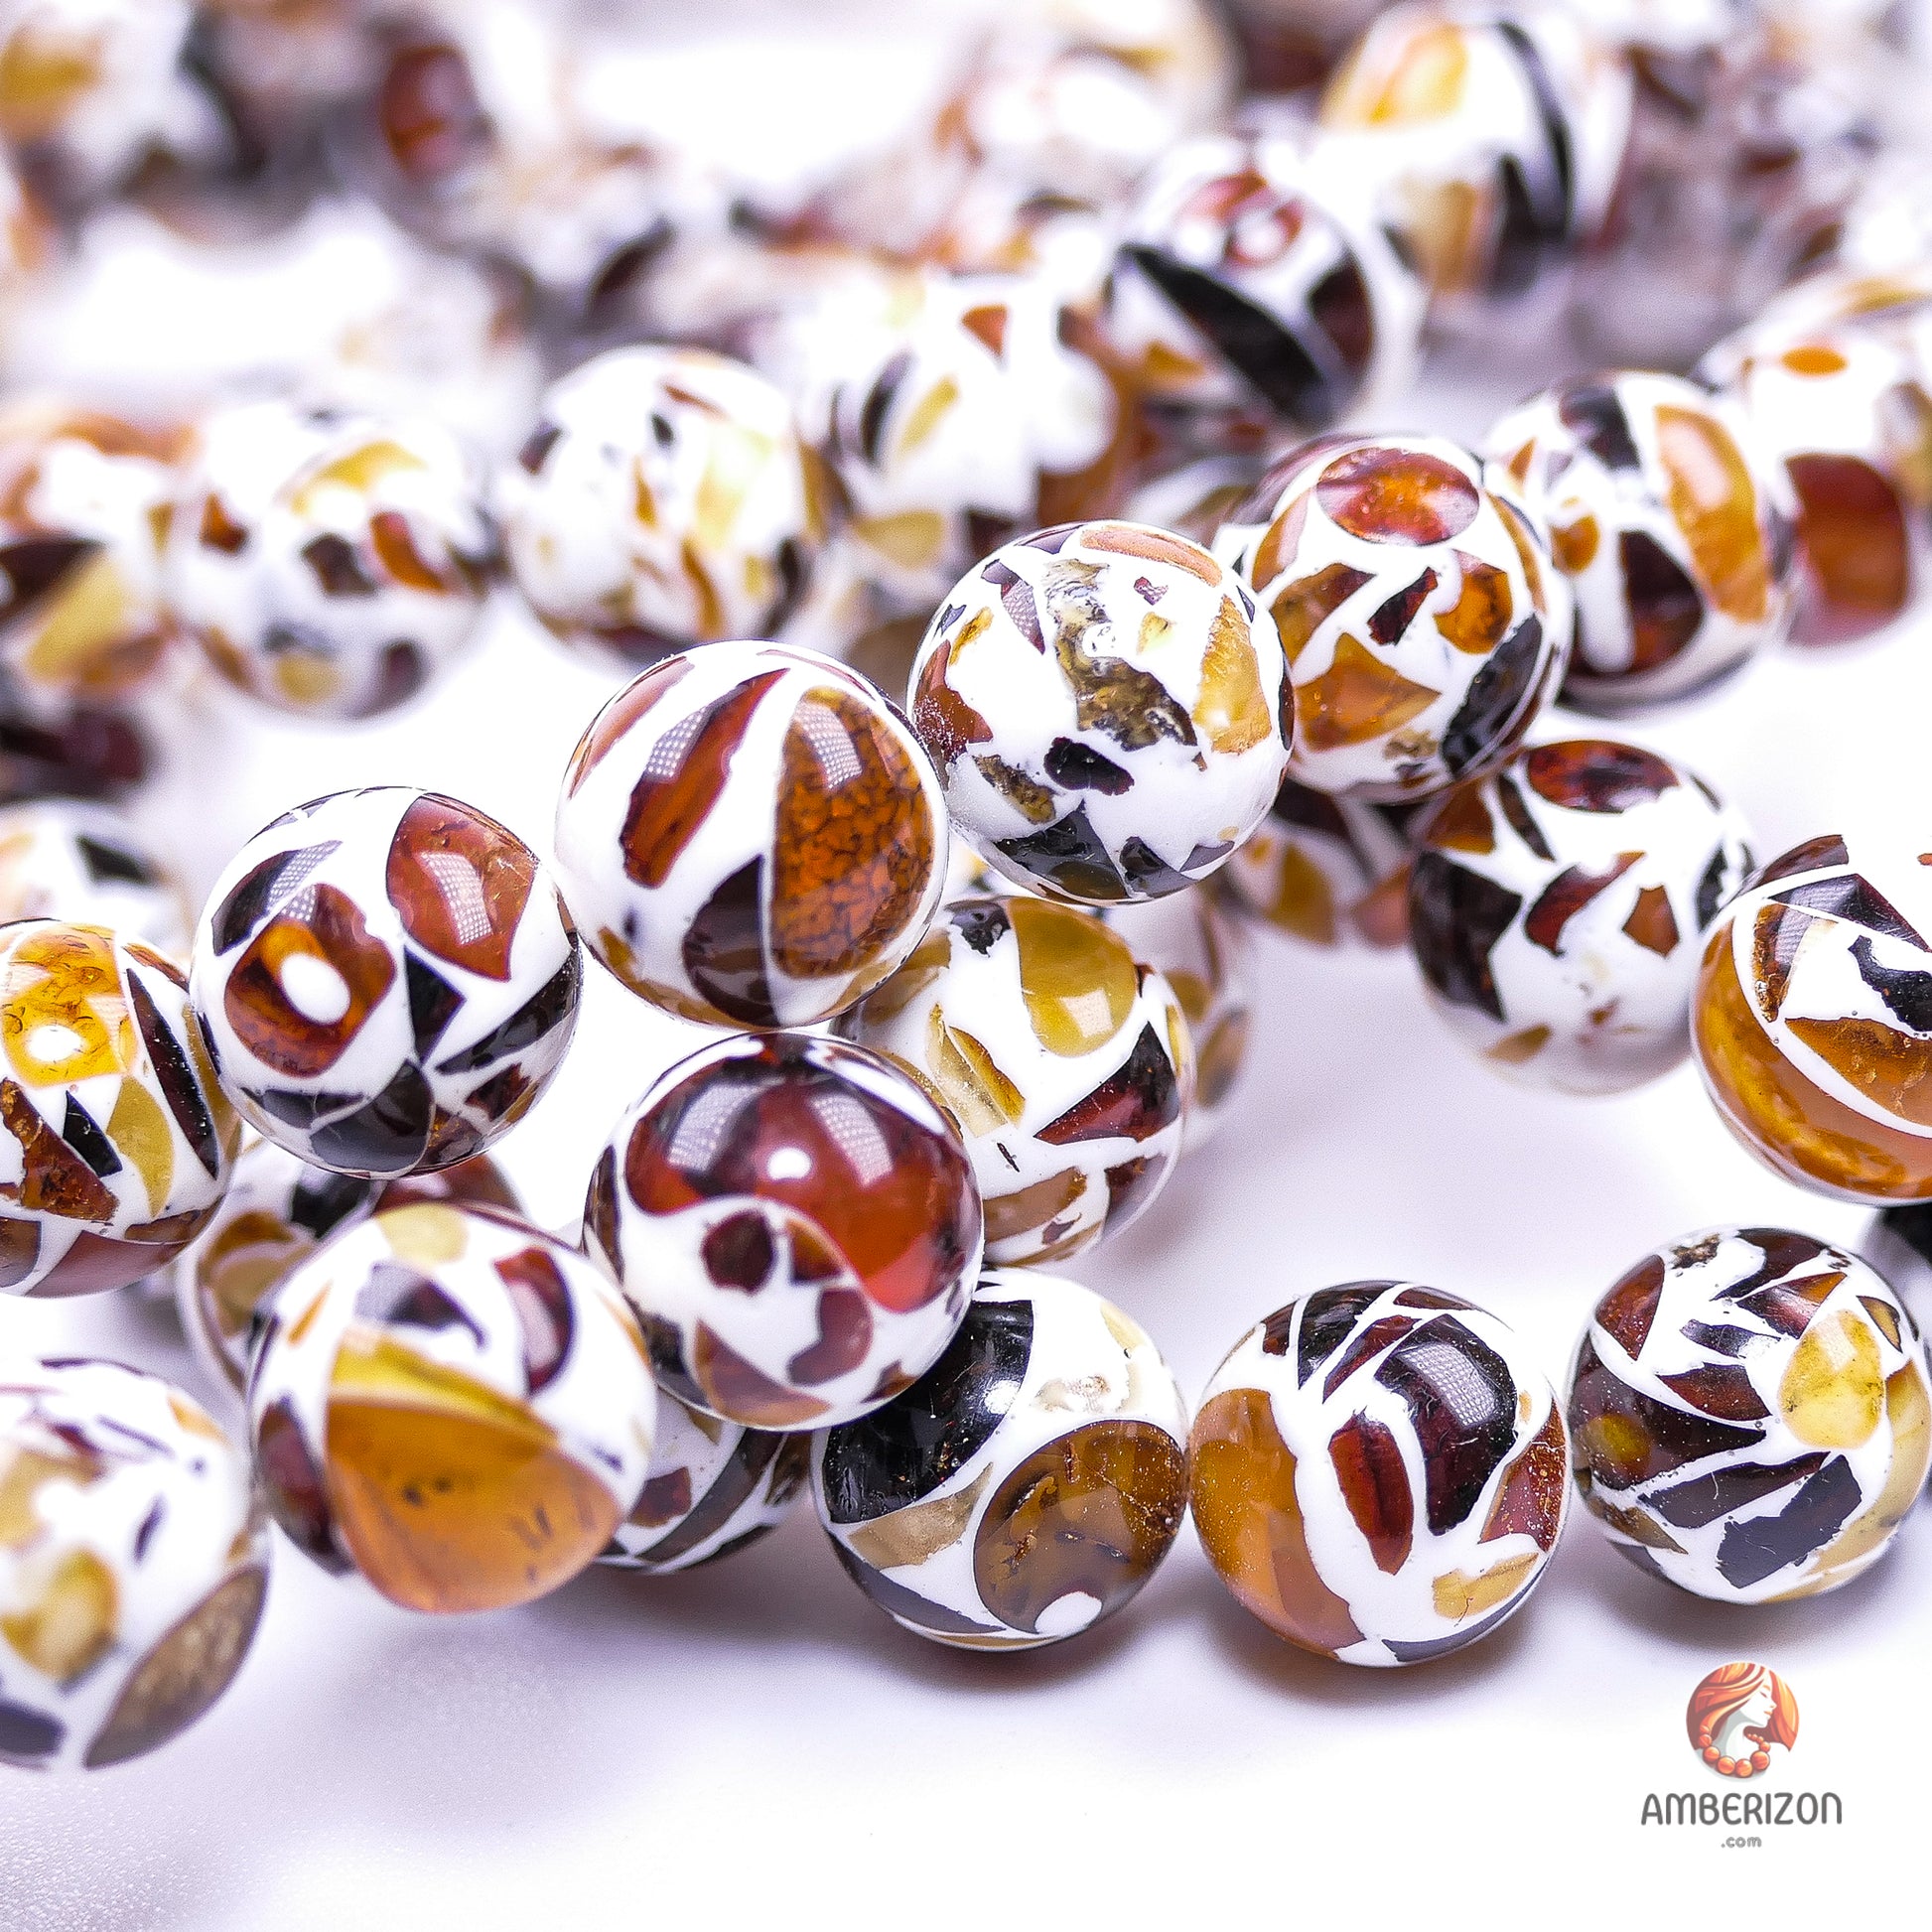 Mosaic amber ball bracelet - Premium AAA quality round beads - Stretchy